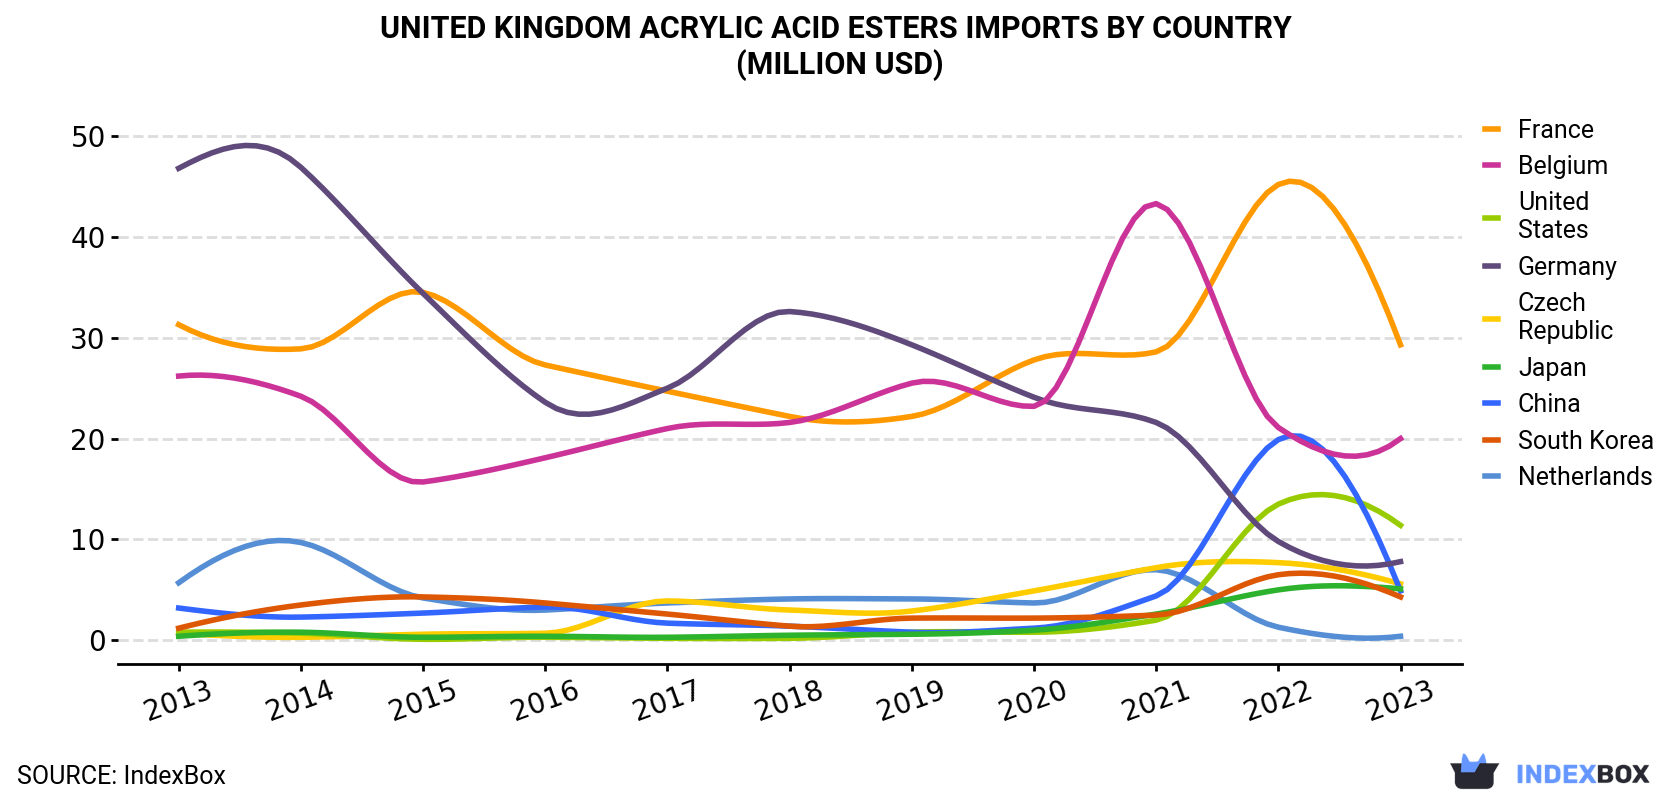 United Kingdom Acrylic Acid Esters Imports By Country (Million USD)